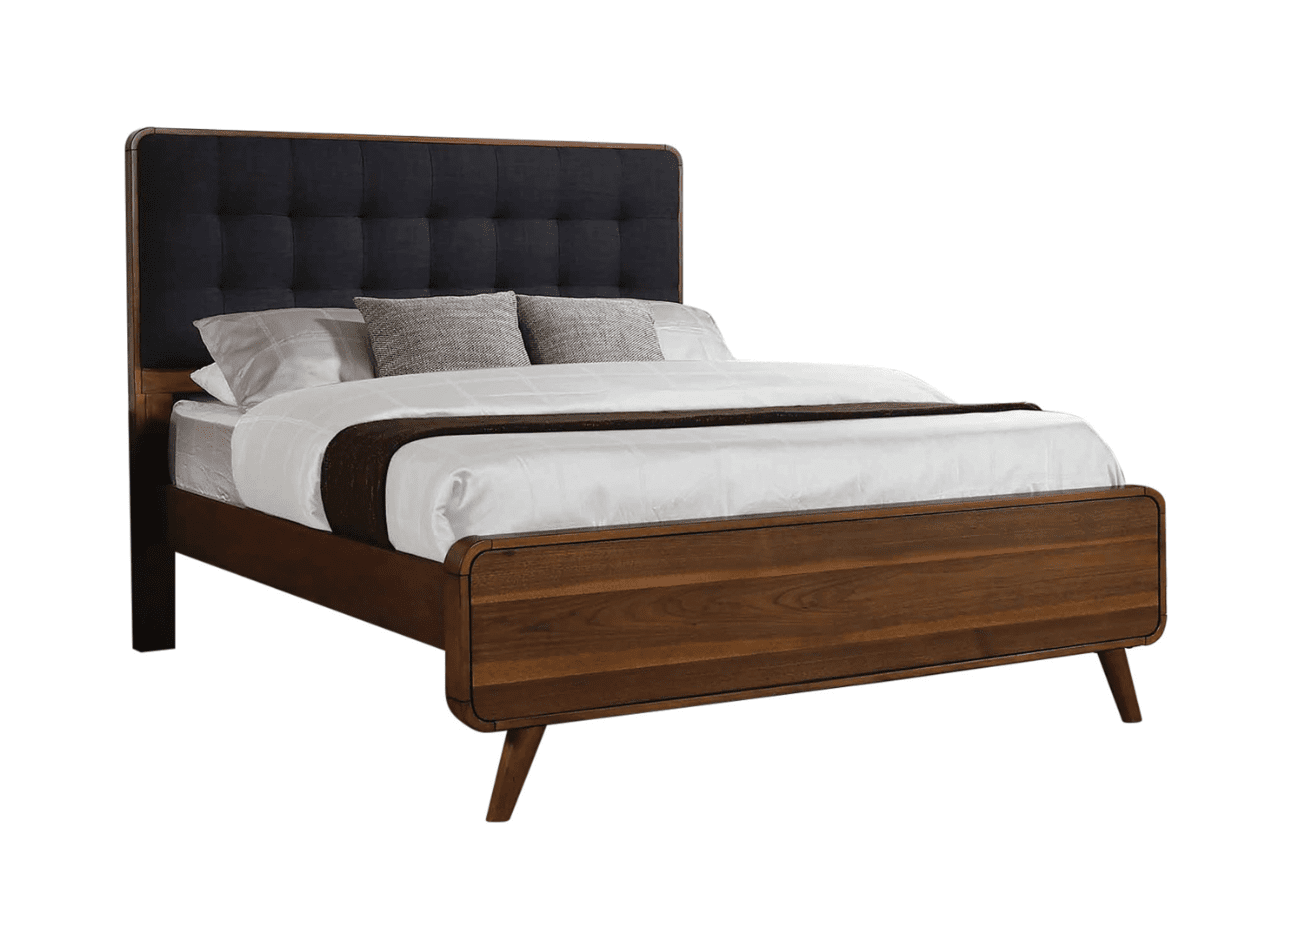 Milton King Bedroom Set With Upholstered Tufted Headboard - Dark Walnut